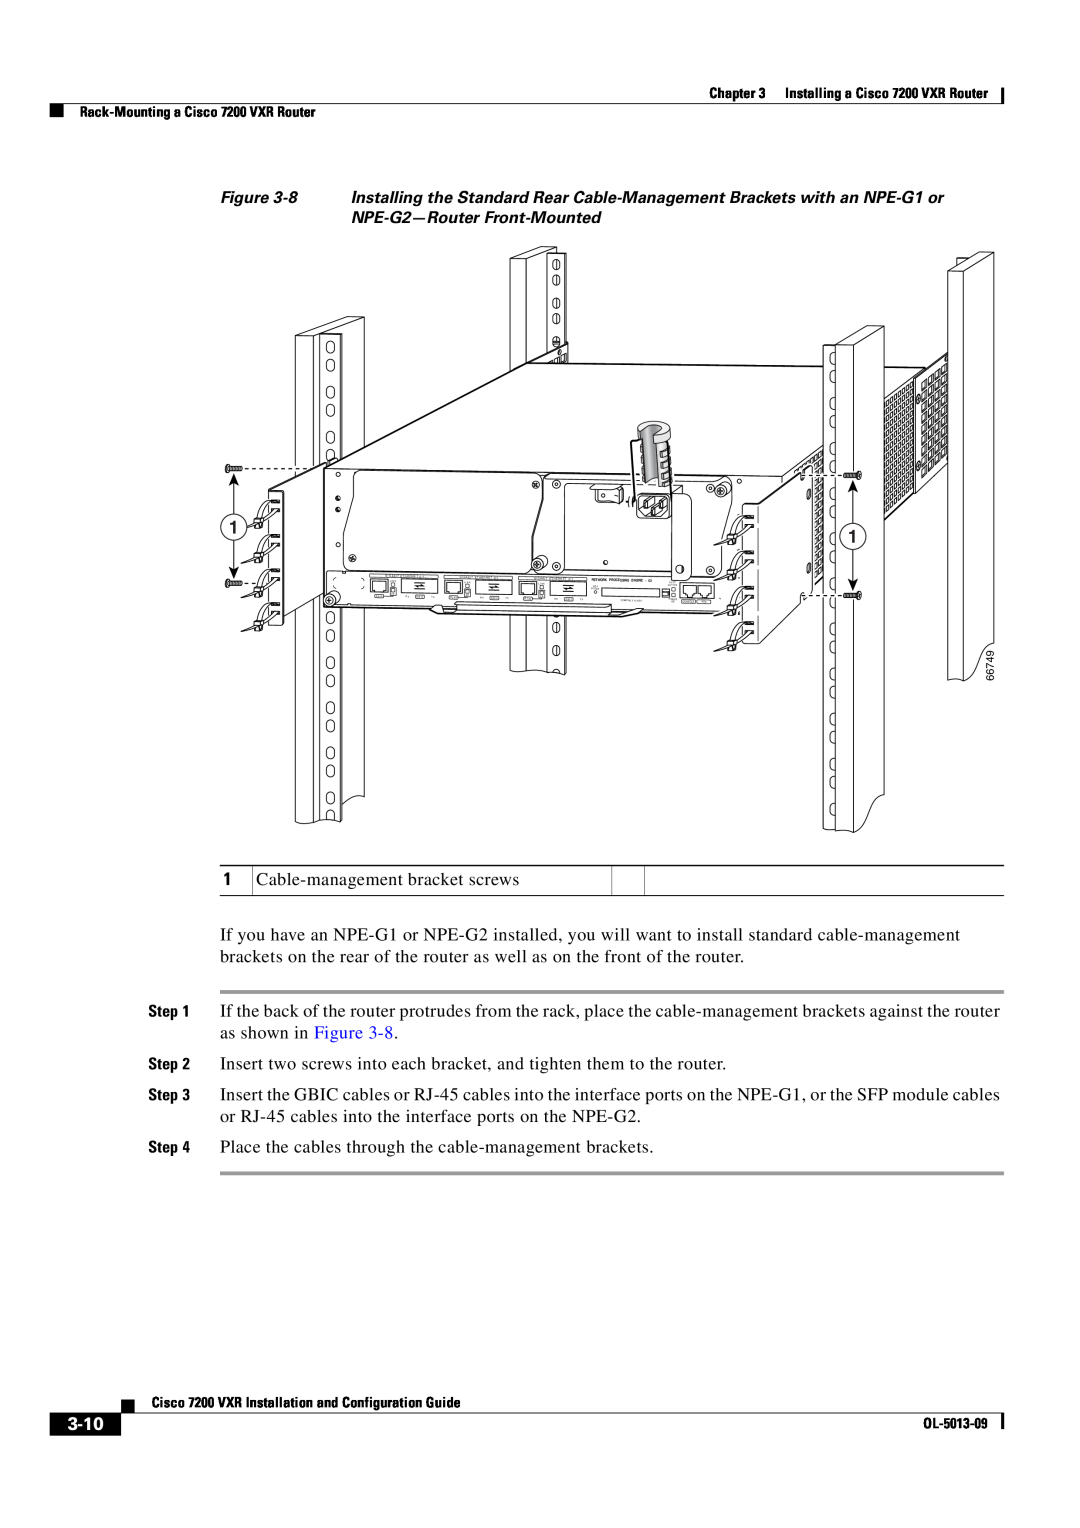 Cisco Systems 7200 VXR manual 3-10, Cable-management bracket screws 